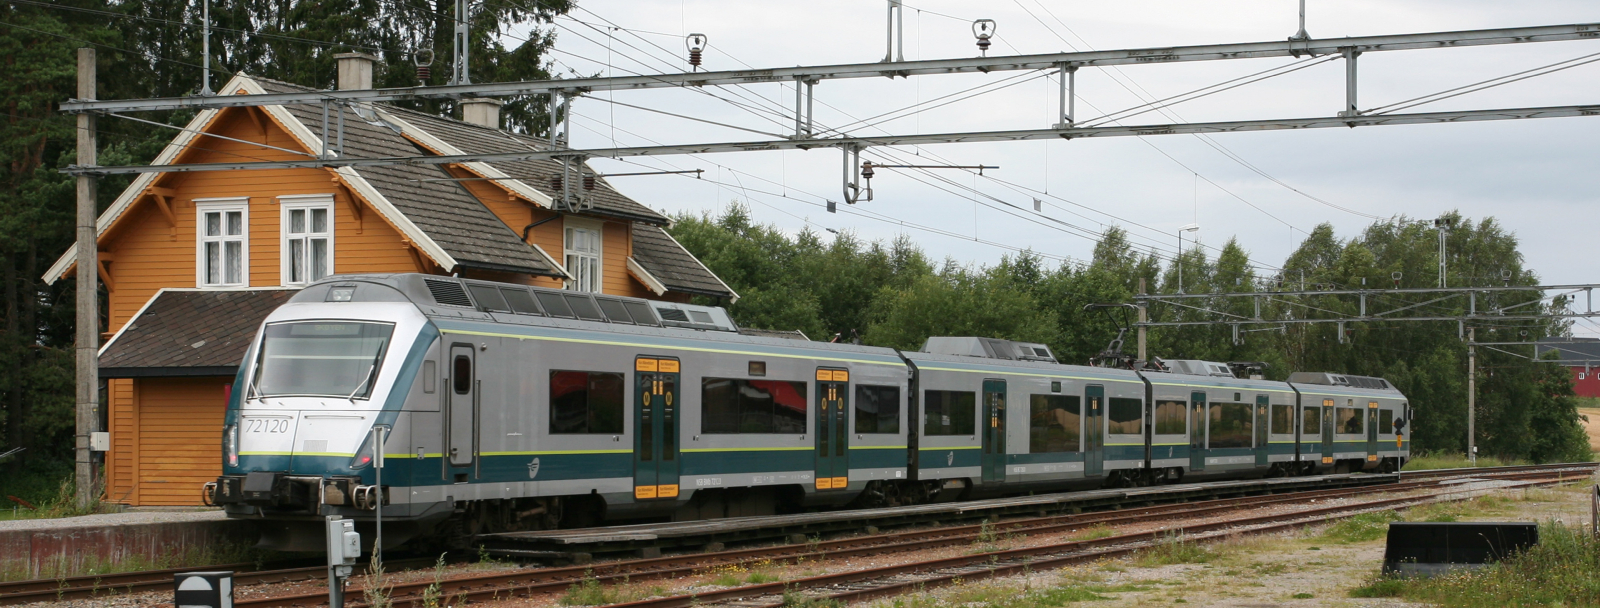 Train in August 2007 in Kråkstad